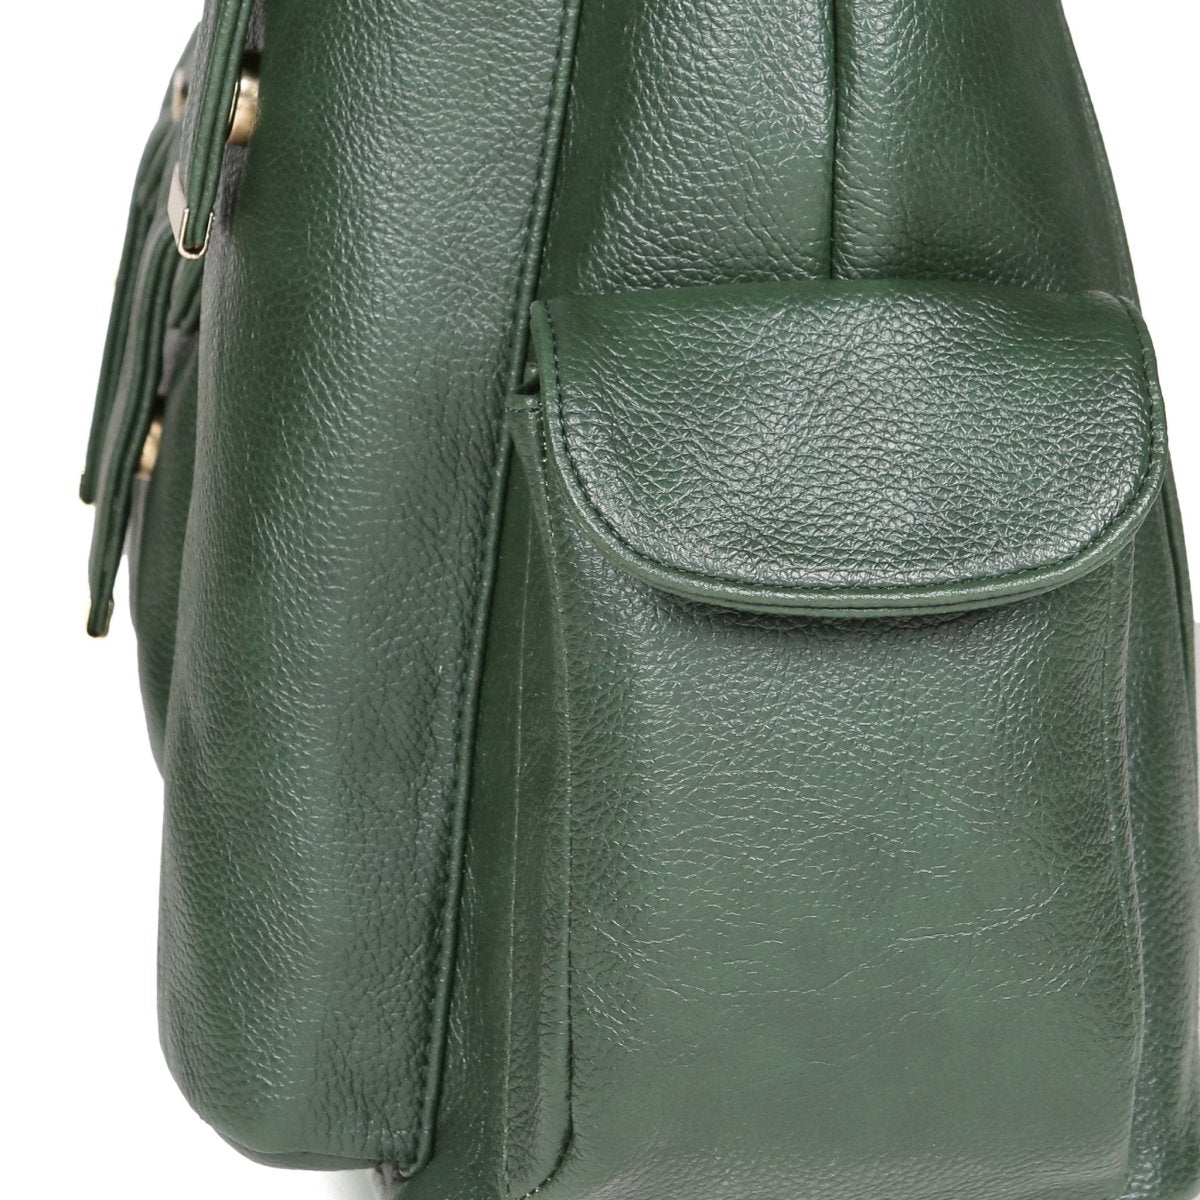 Glamorous Ivy- Premium Diaper Handbag - DBG-GMIVY